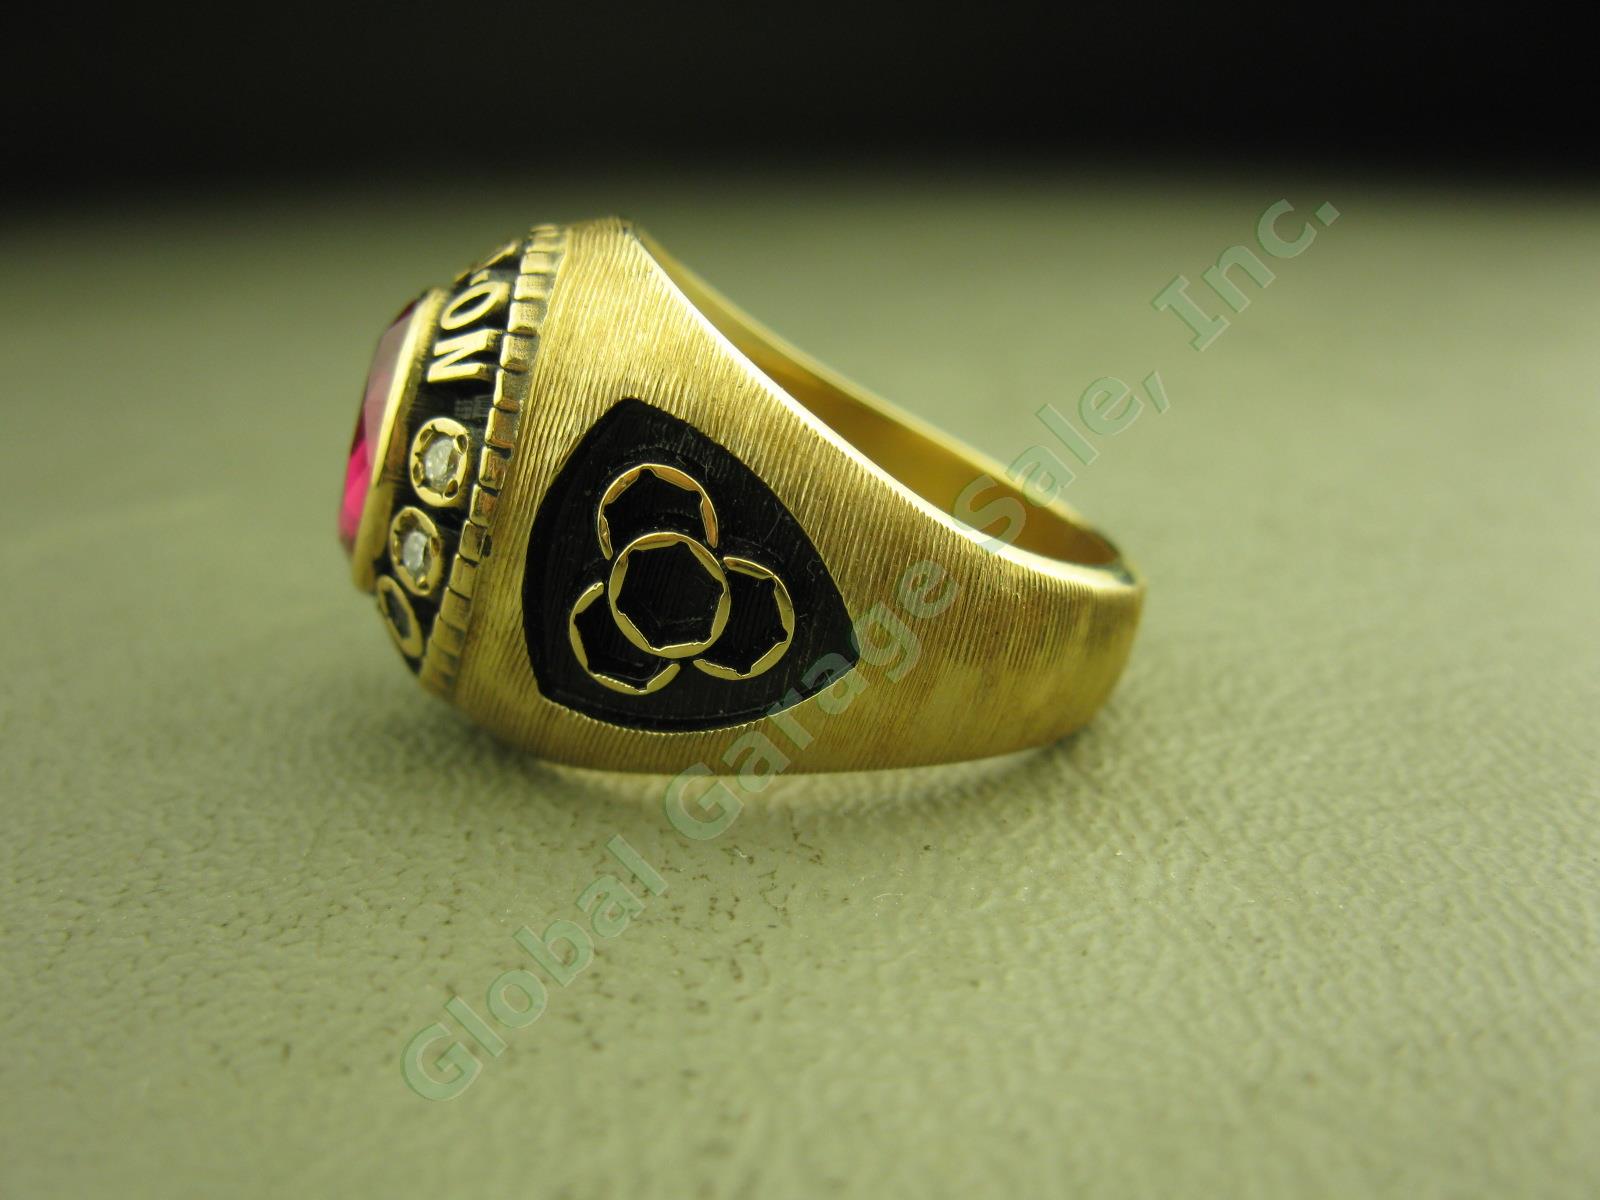 Snap-On Tools Dealer Sales Award 10K Gold Ring W/3 Diamonds 20.5 Gram Size 10.75 2